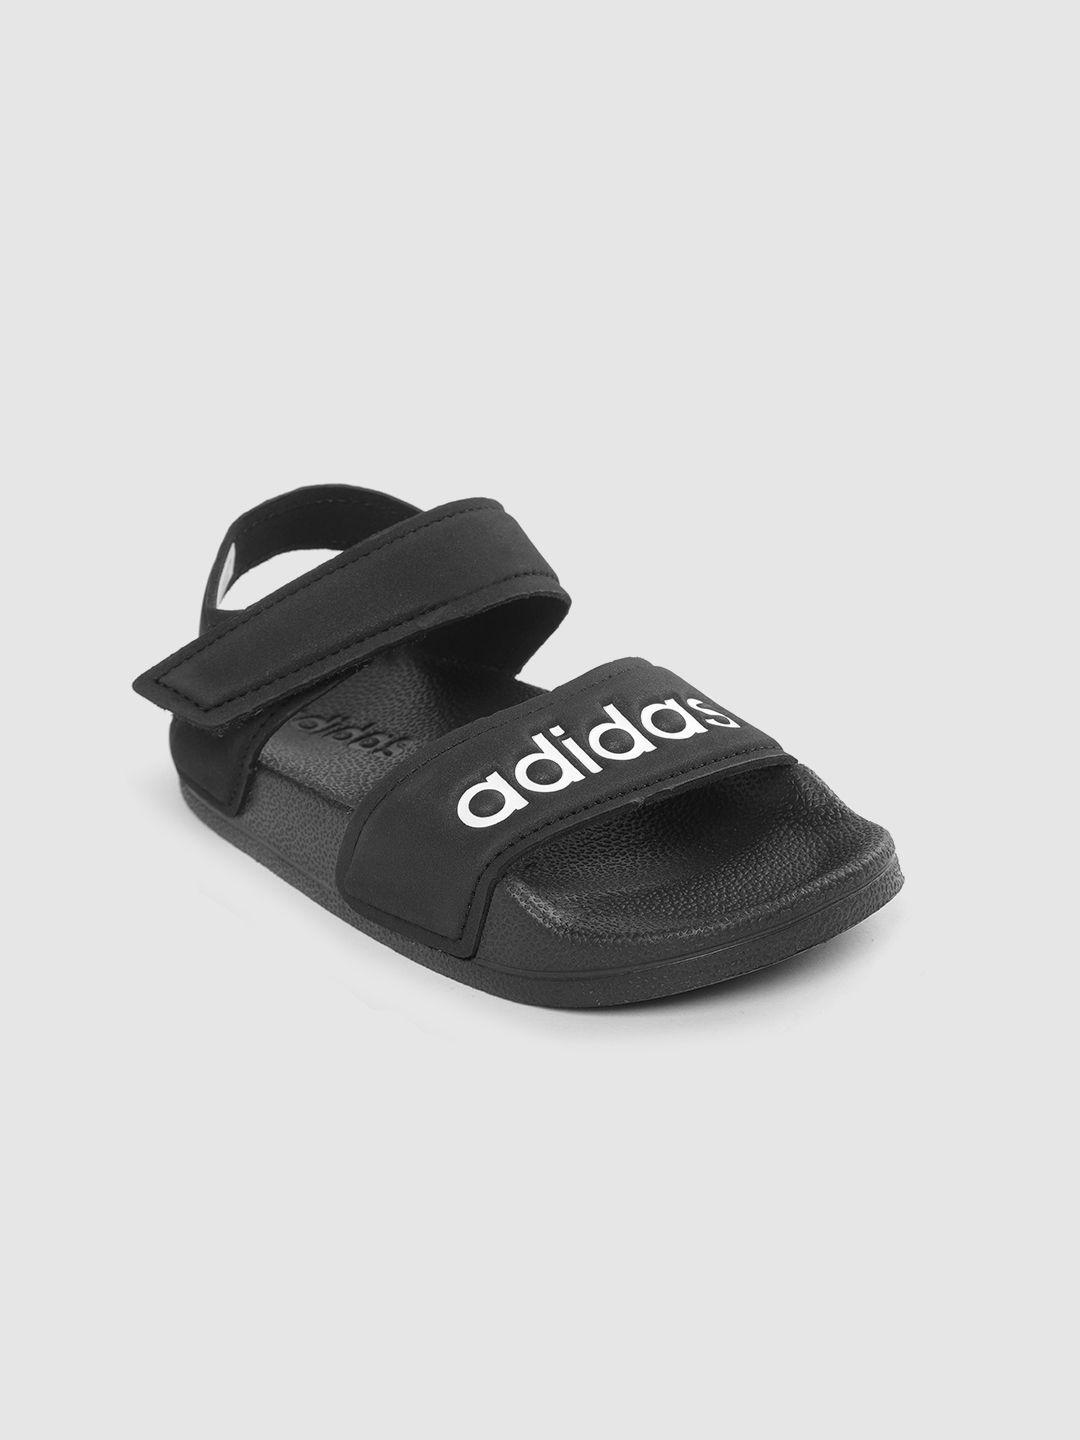 adidas-boys-black-adilette-printed-sports-sandals